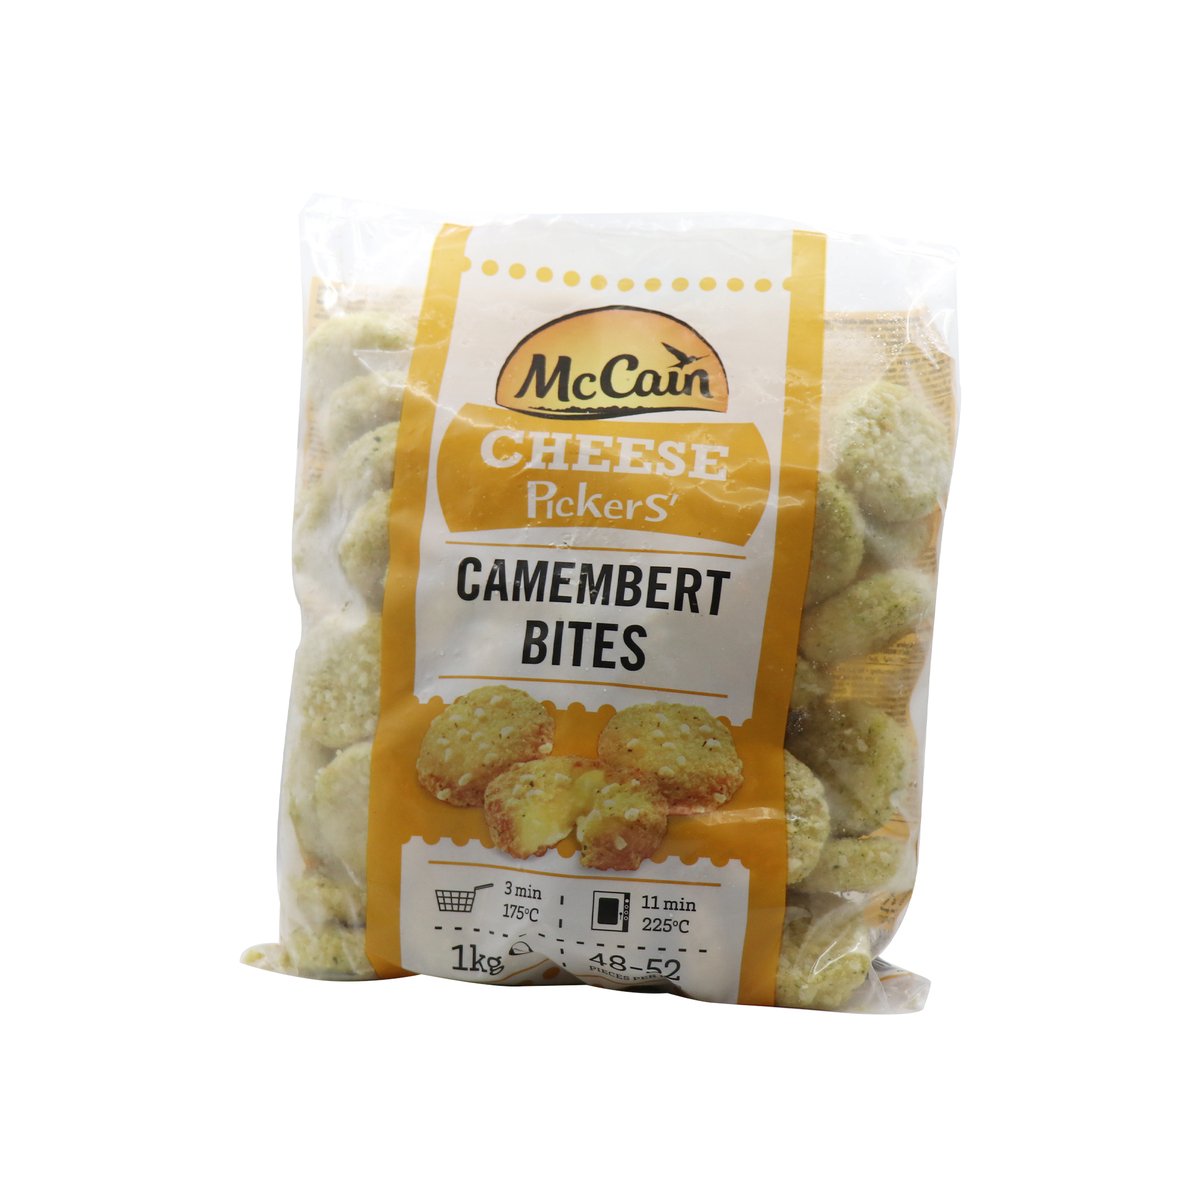 McCain Cheese PickerS' Camembert Bites 1kg